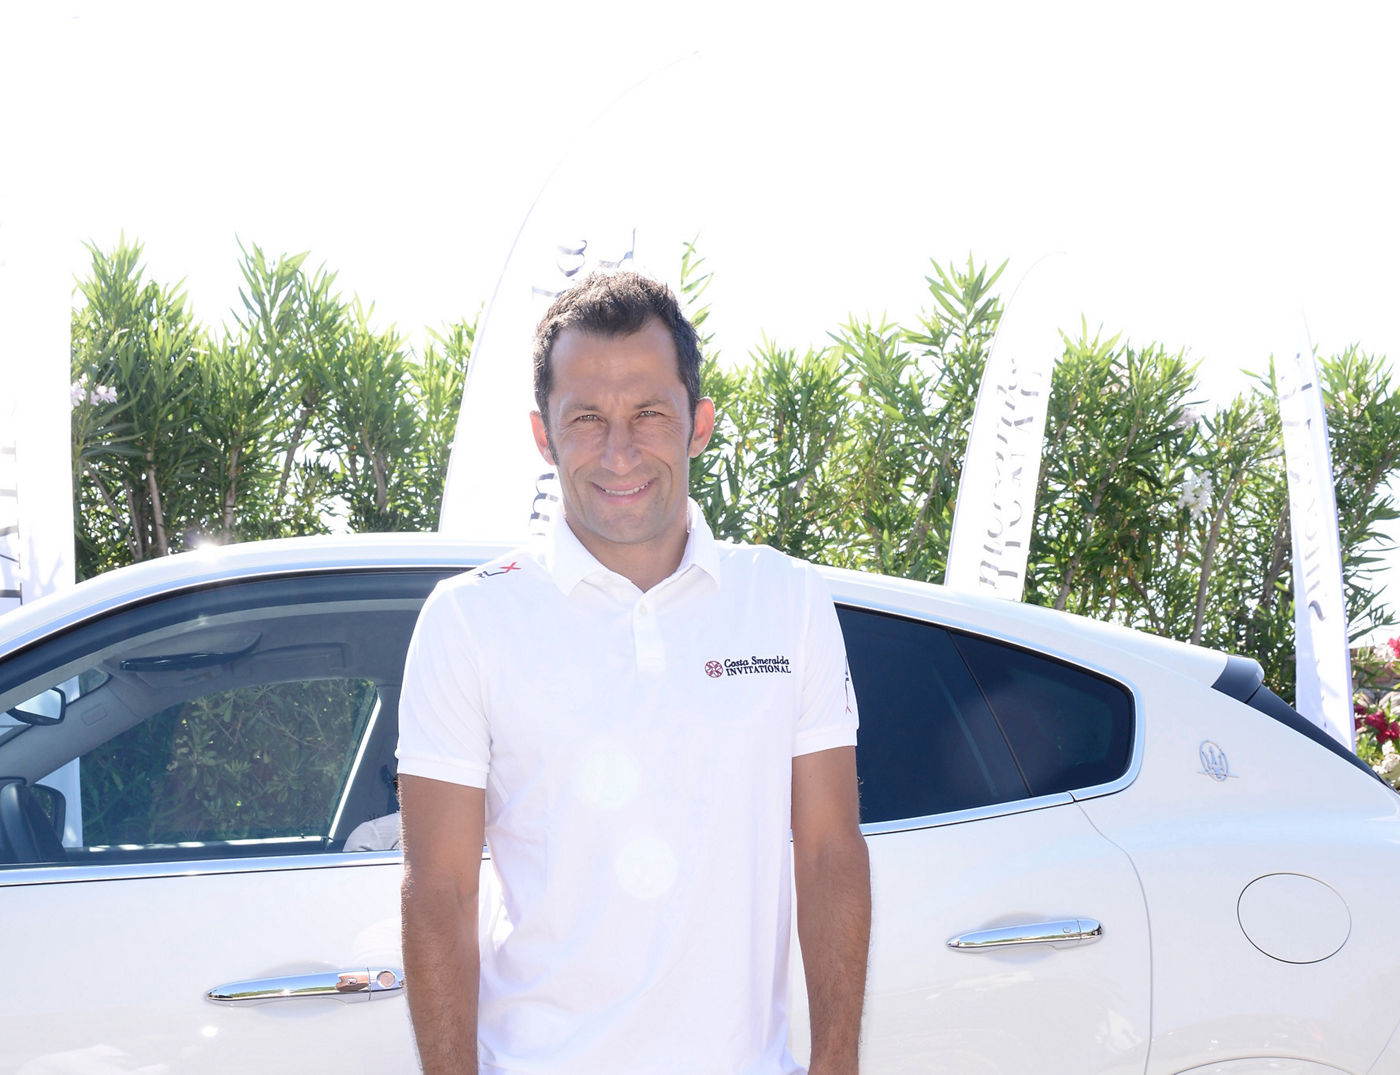 Hasan-Salihamidzic-arrives-at-Pevero-Golf-Club-for-Costa-Smeralda-Invitational-in-a-Maserati-Levante